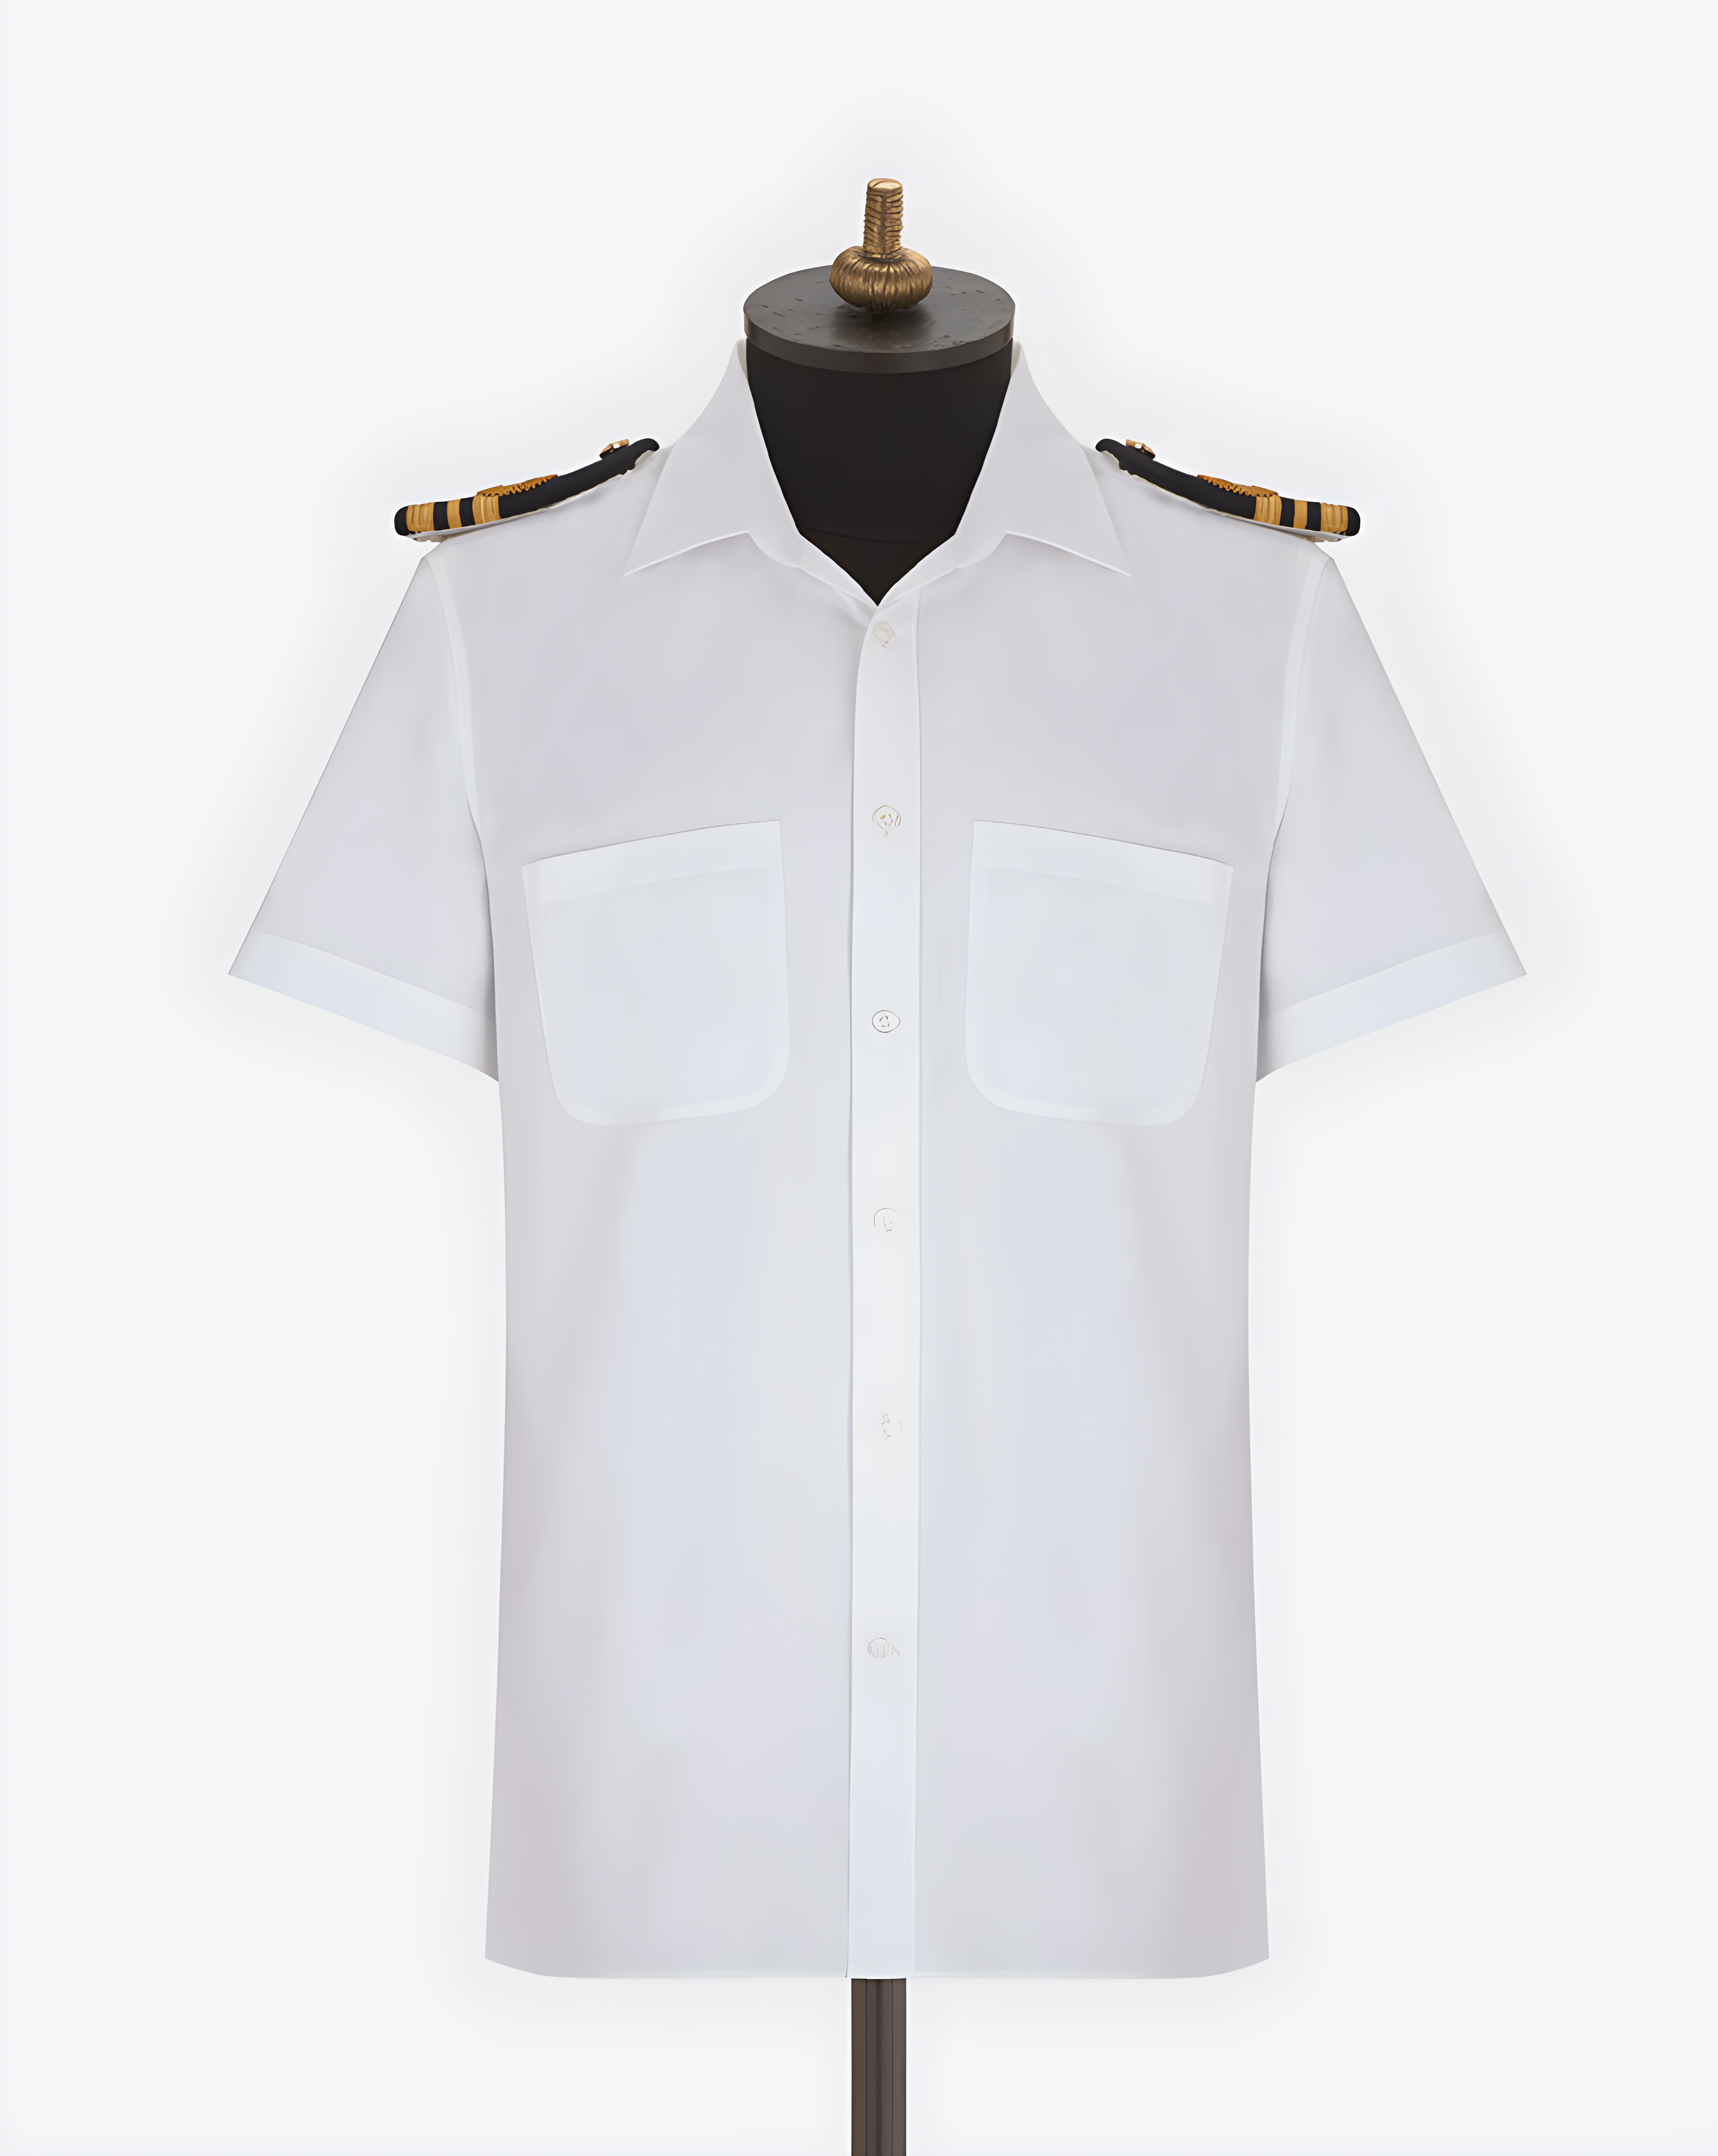 Navy Blue Zman Logo Tee Shirt - 100% Cotton Short Sleeve Fishing